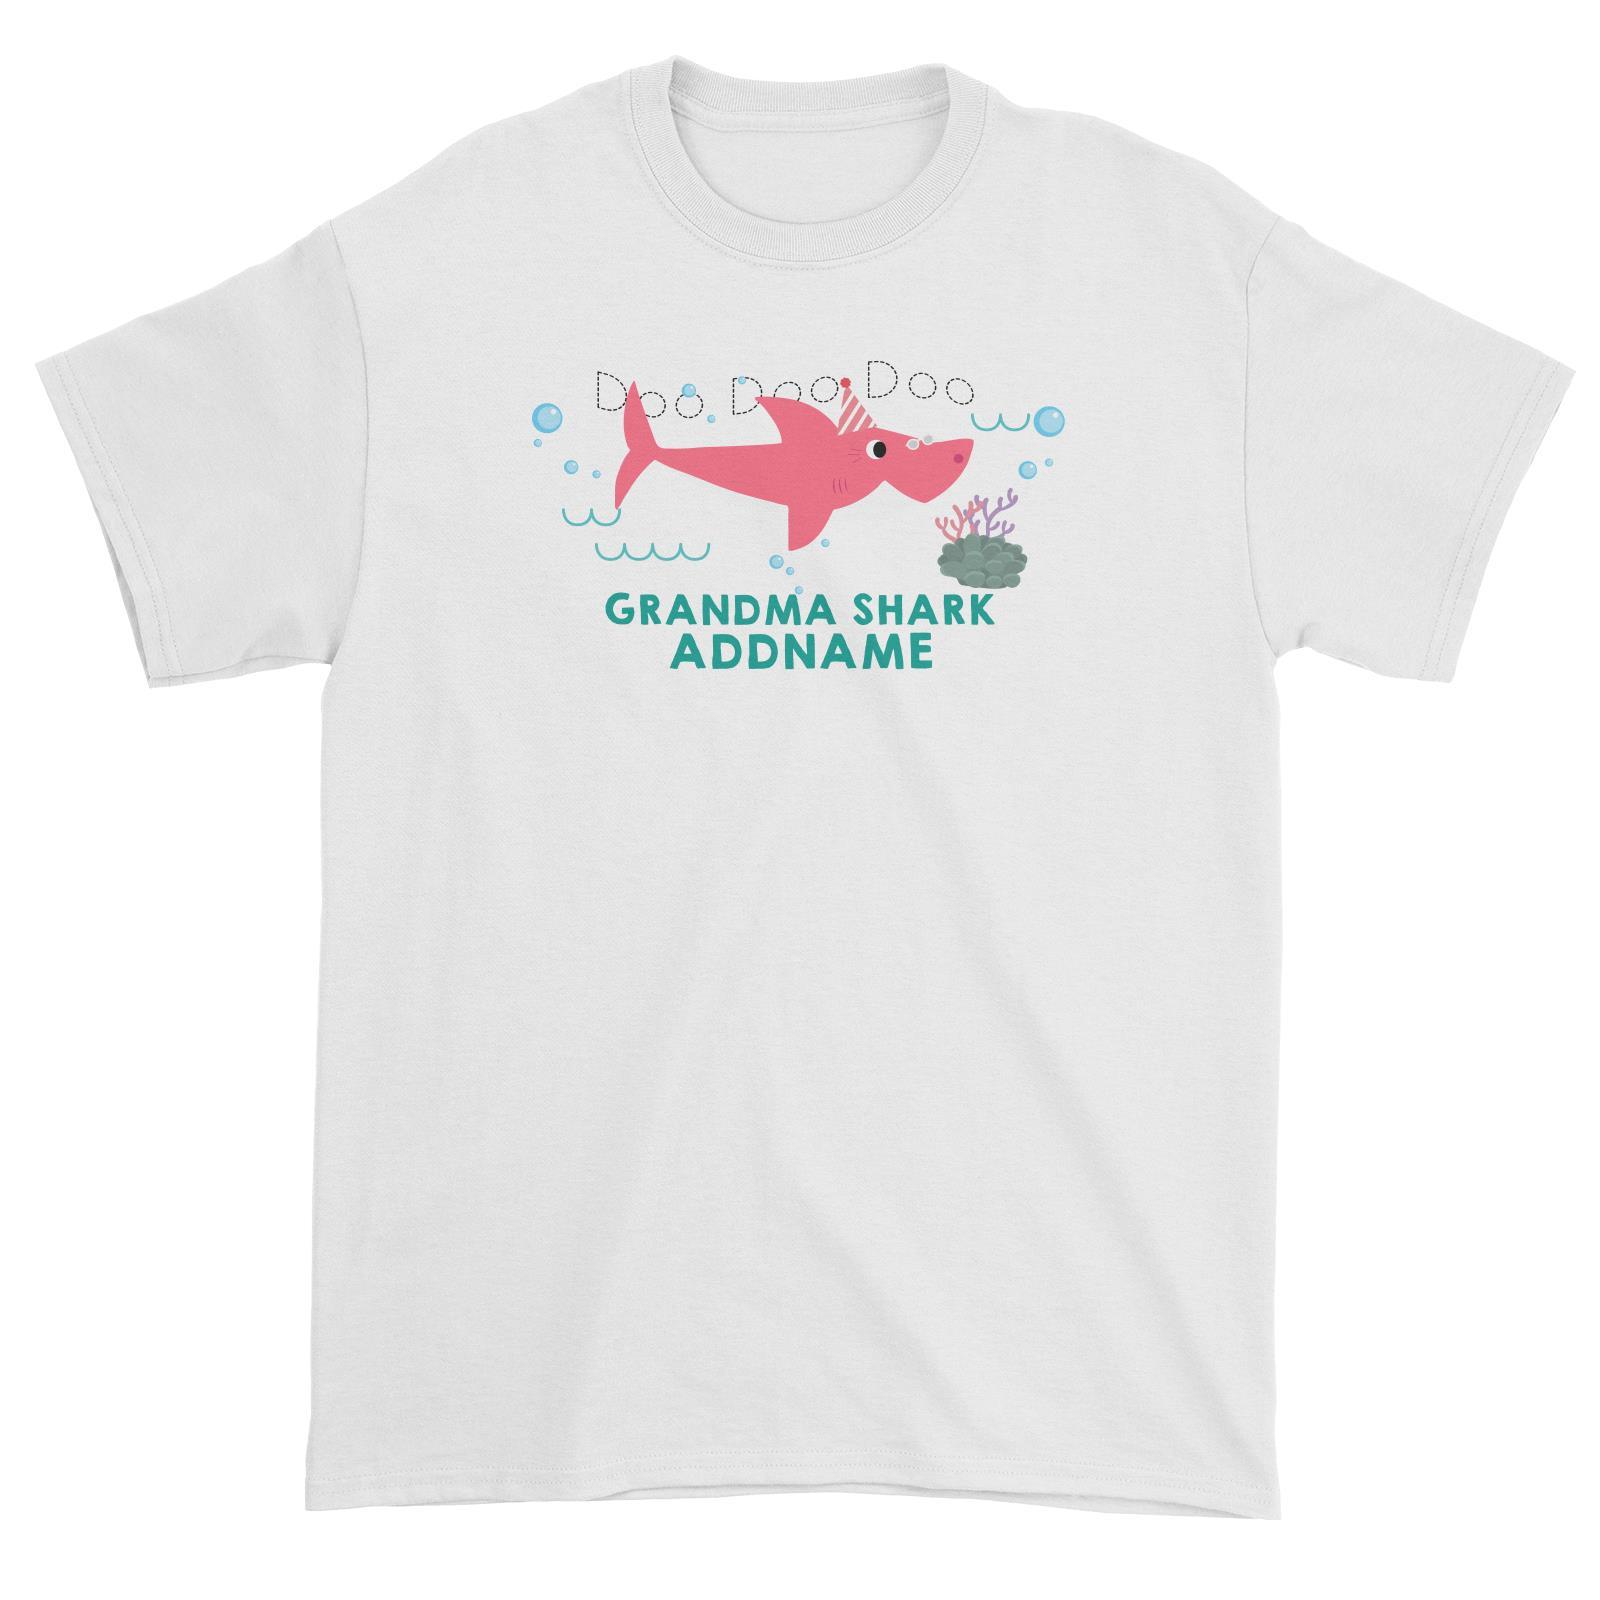 Grandma Shark Birthday Theme Addname Unisex T-Shirt